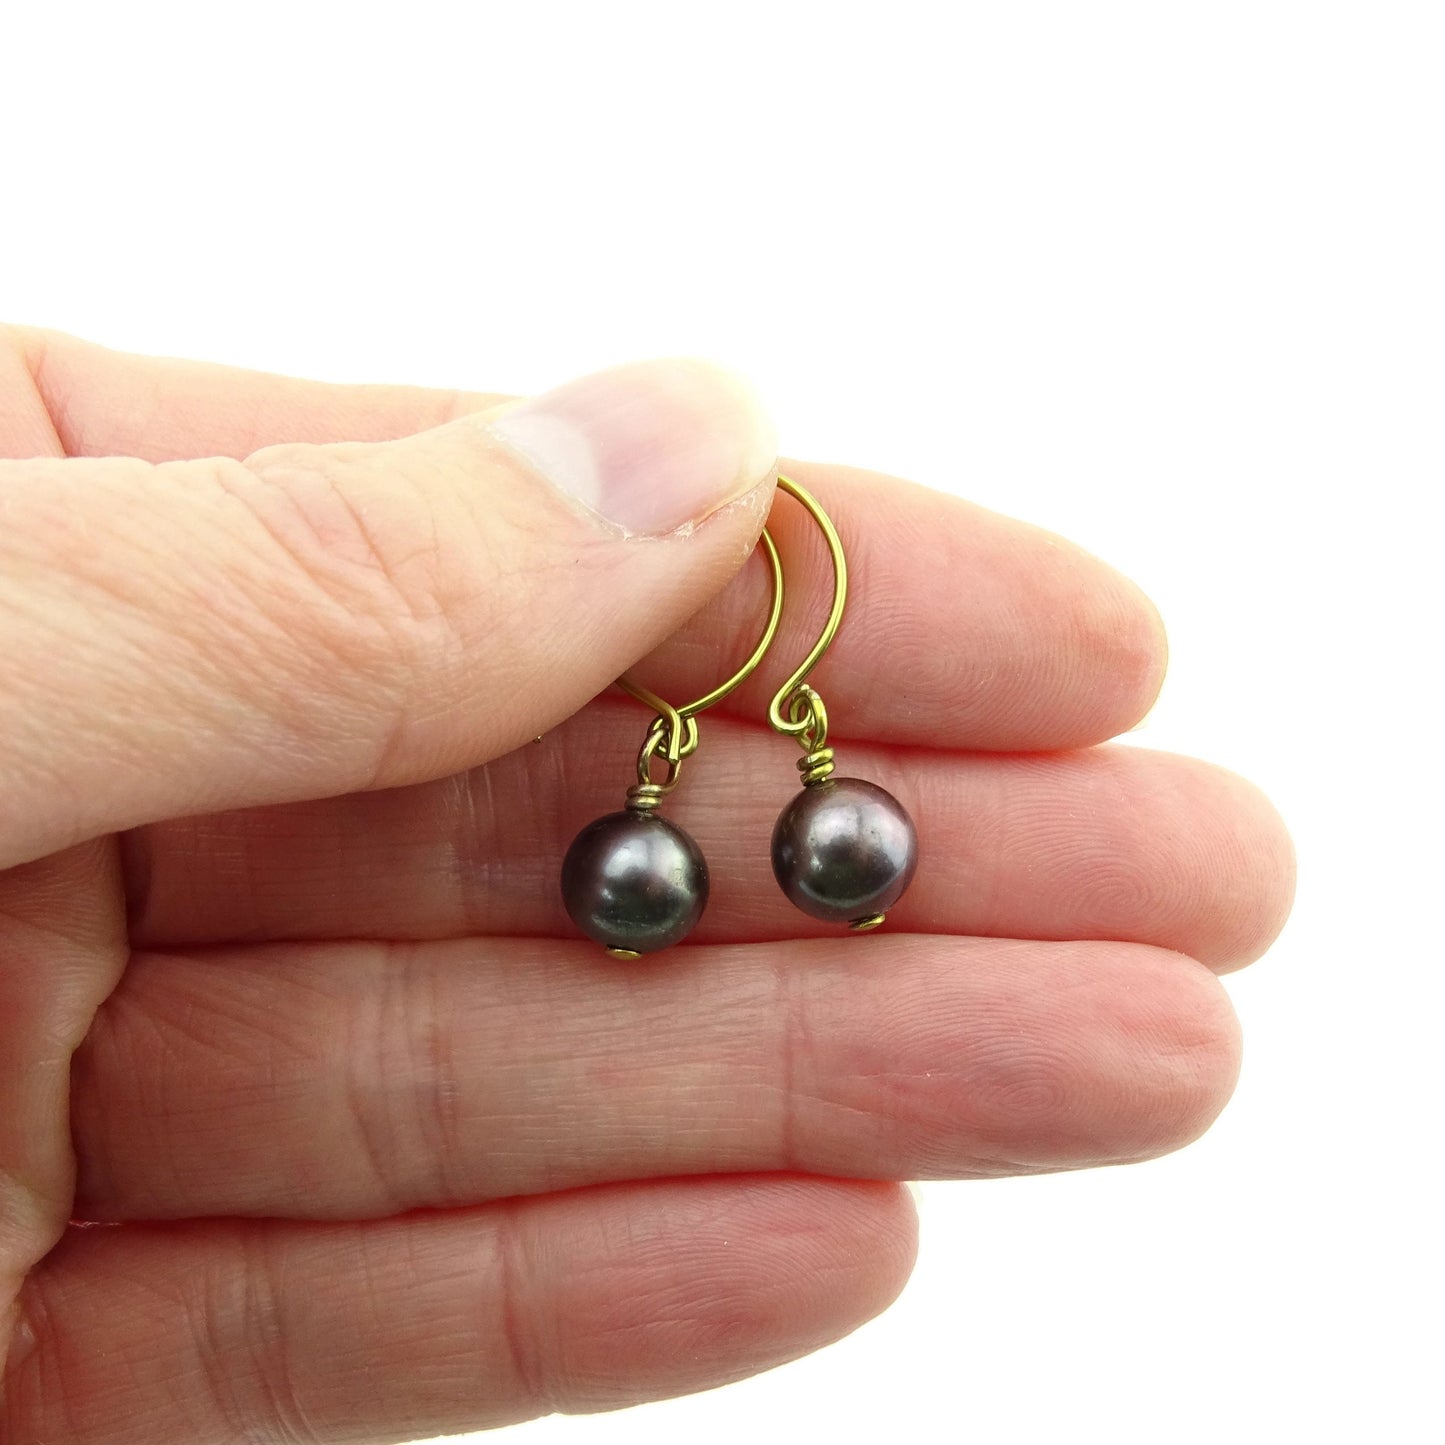 Black Pearl Earrings, Yellow Gold Niobium Nickel Free Earrings, Freshwater Pearls Hypoallergenic Earrings for Sensitive Ears, Non Allergenic